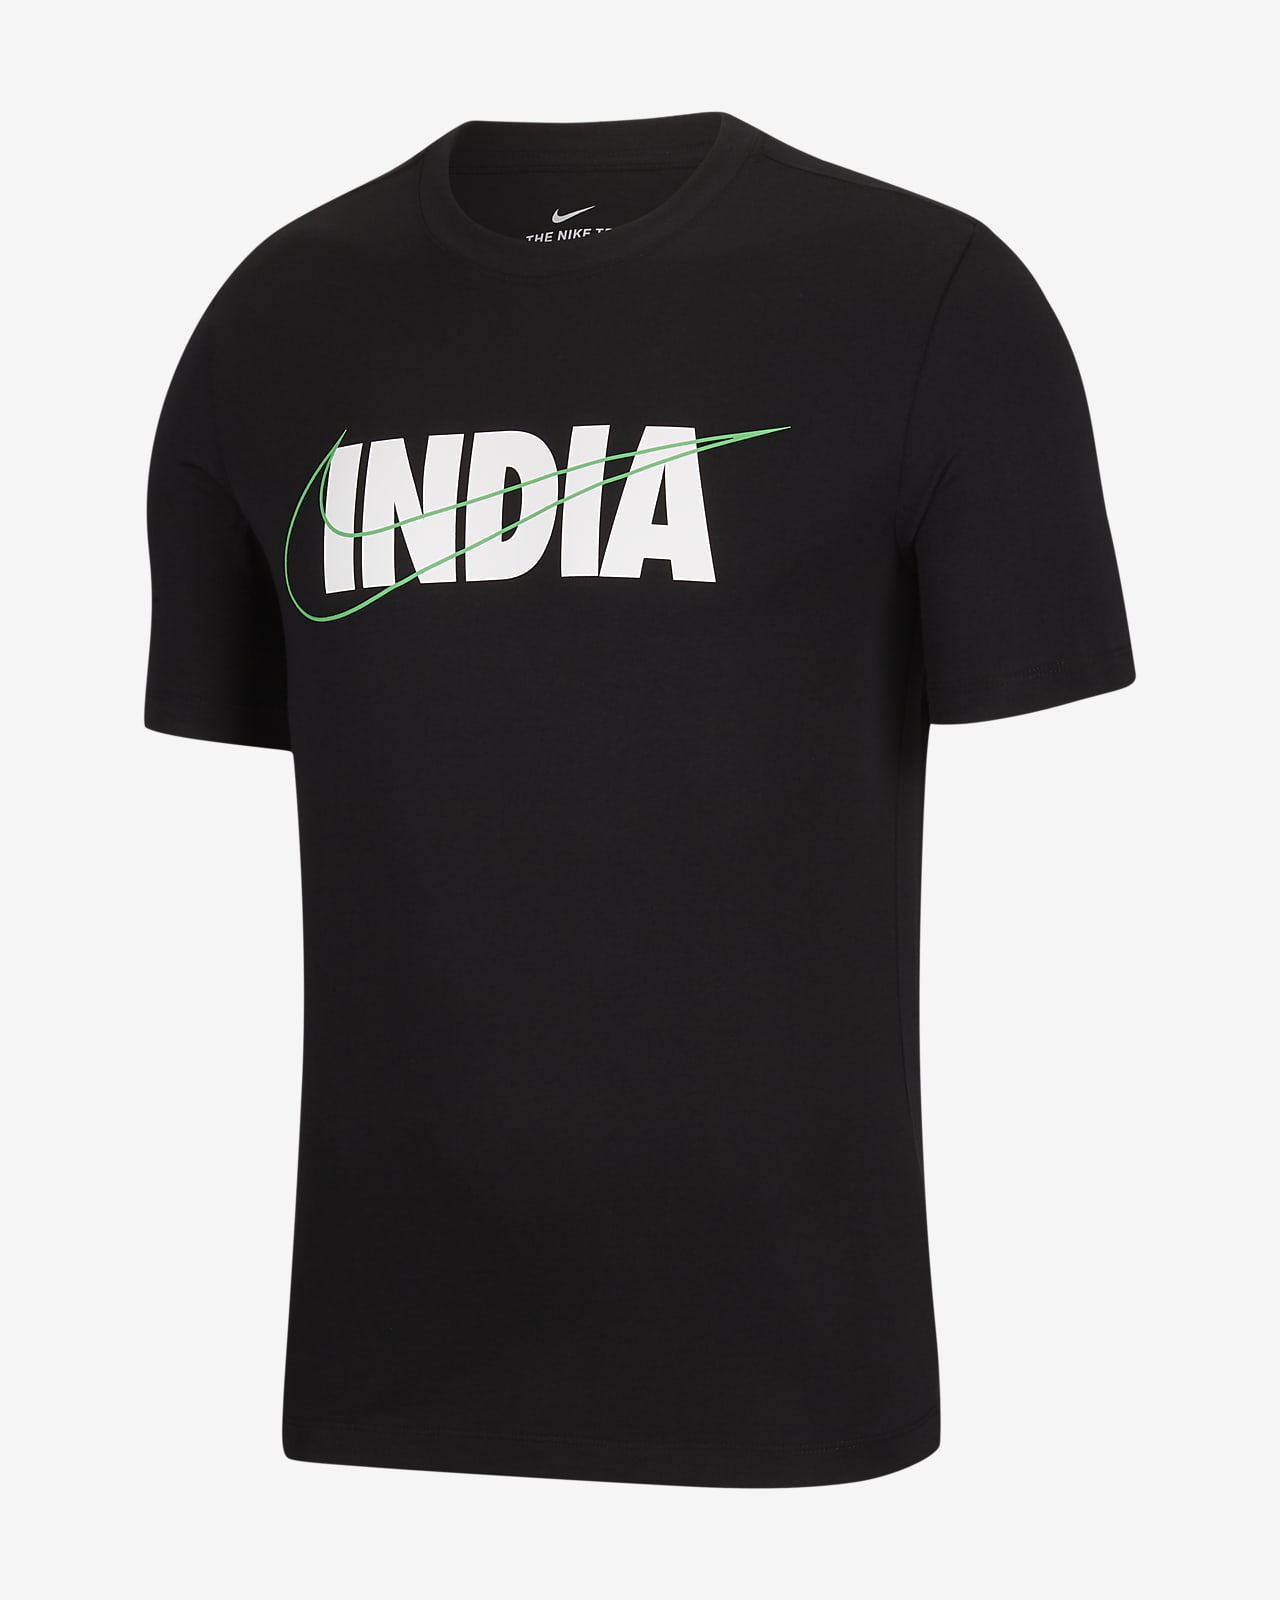 nike full sleeves t shirts india